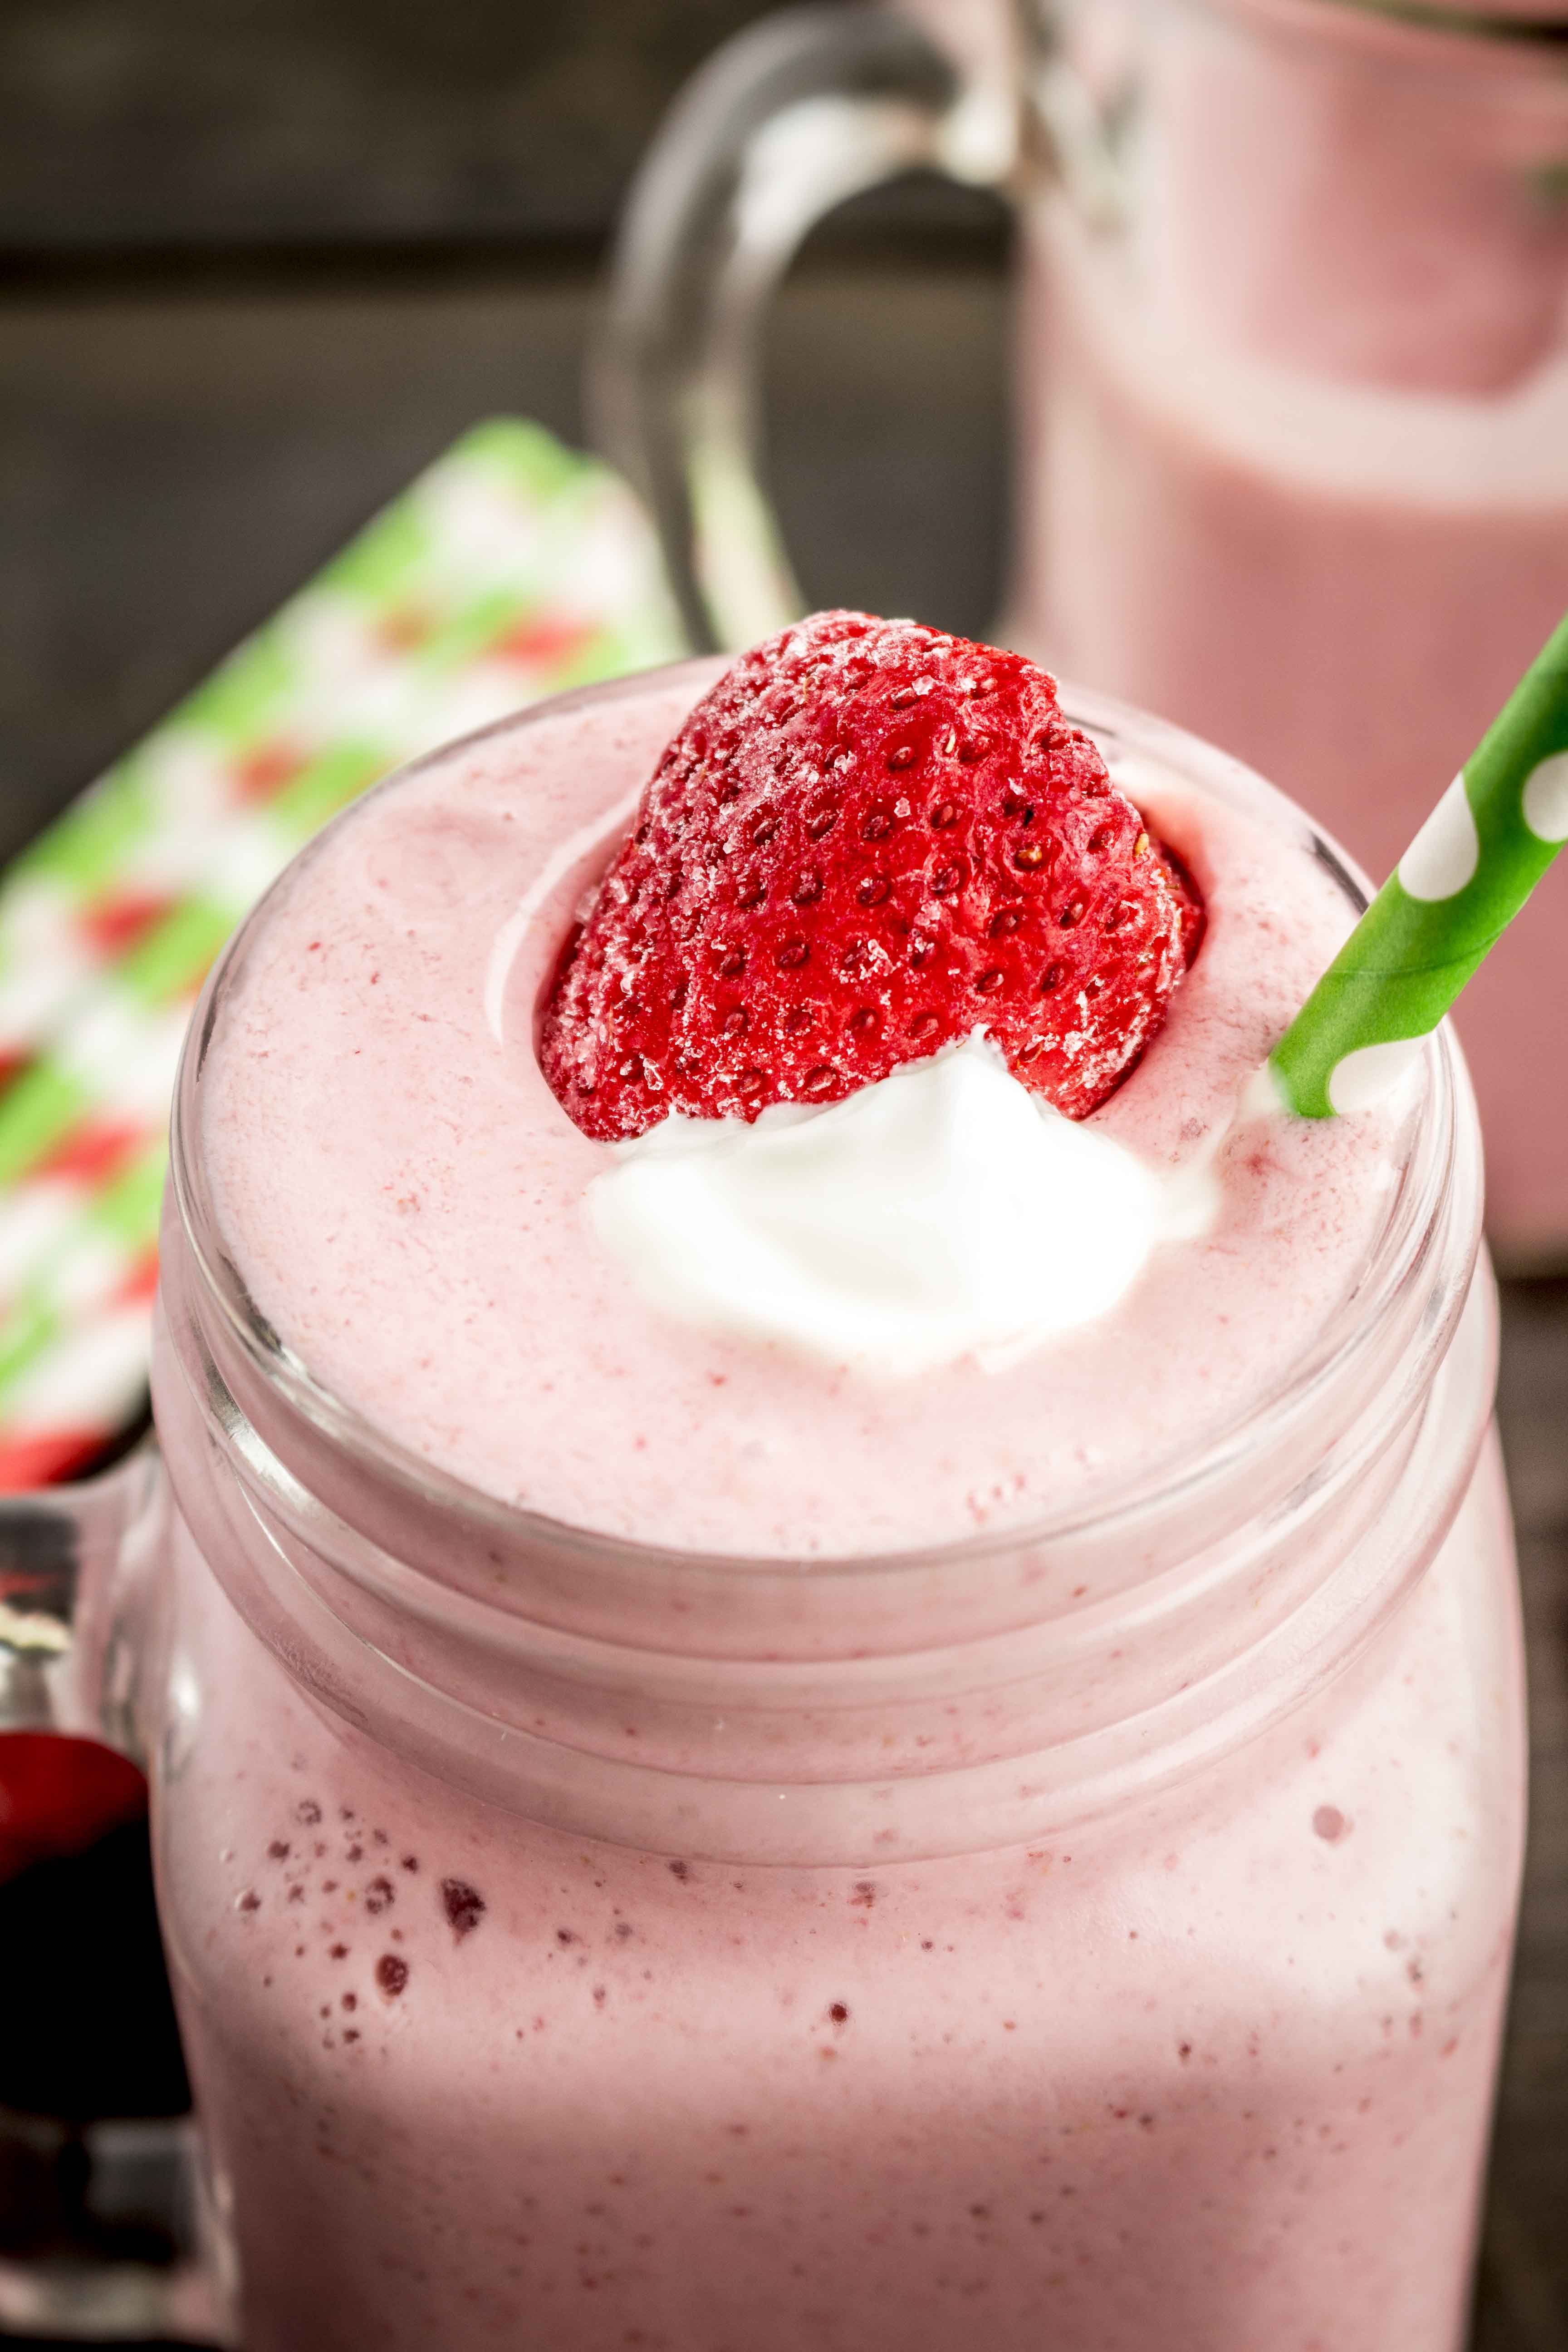 Strawberry Lassi - Refreshing Yogurt-Based Drink from India (gluten free)